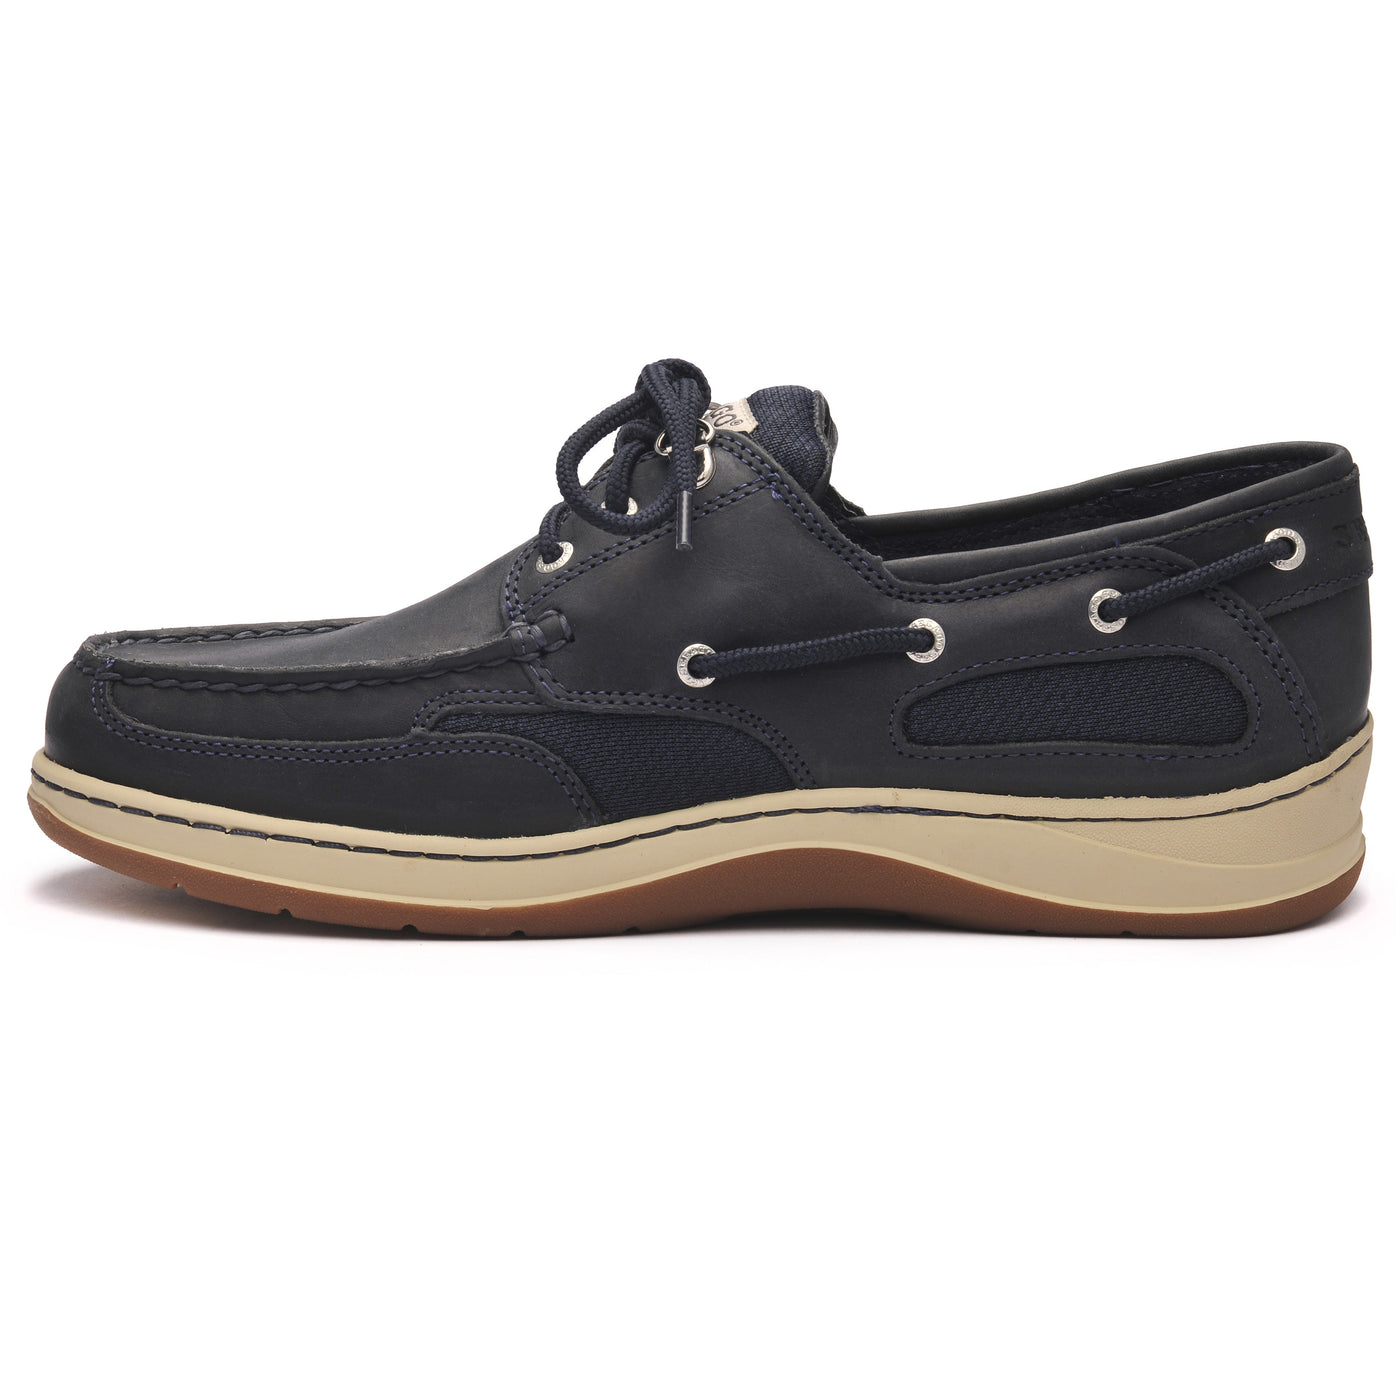 Men's Boat Shoes | Sebago | Marine | Clovehitch II Fgl Waxed | Navy Blue | Side View